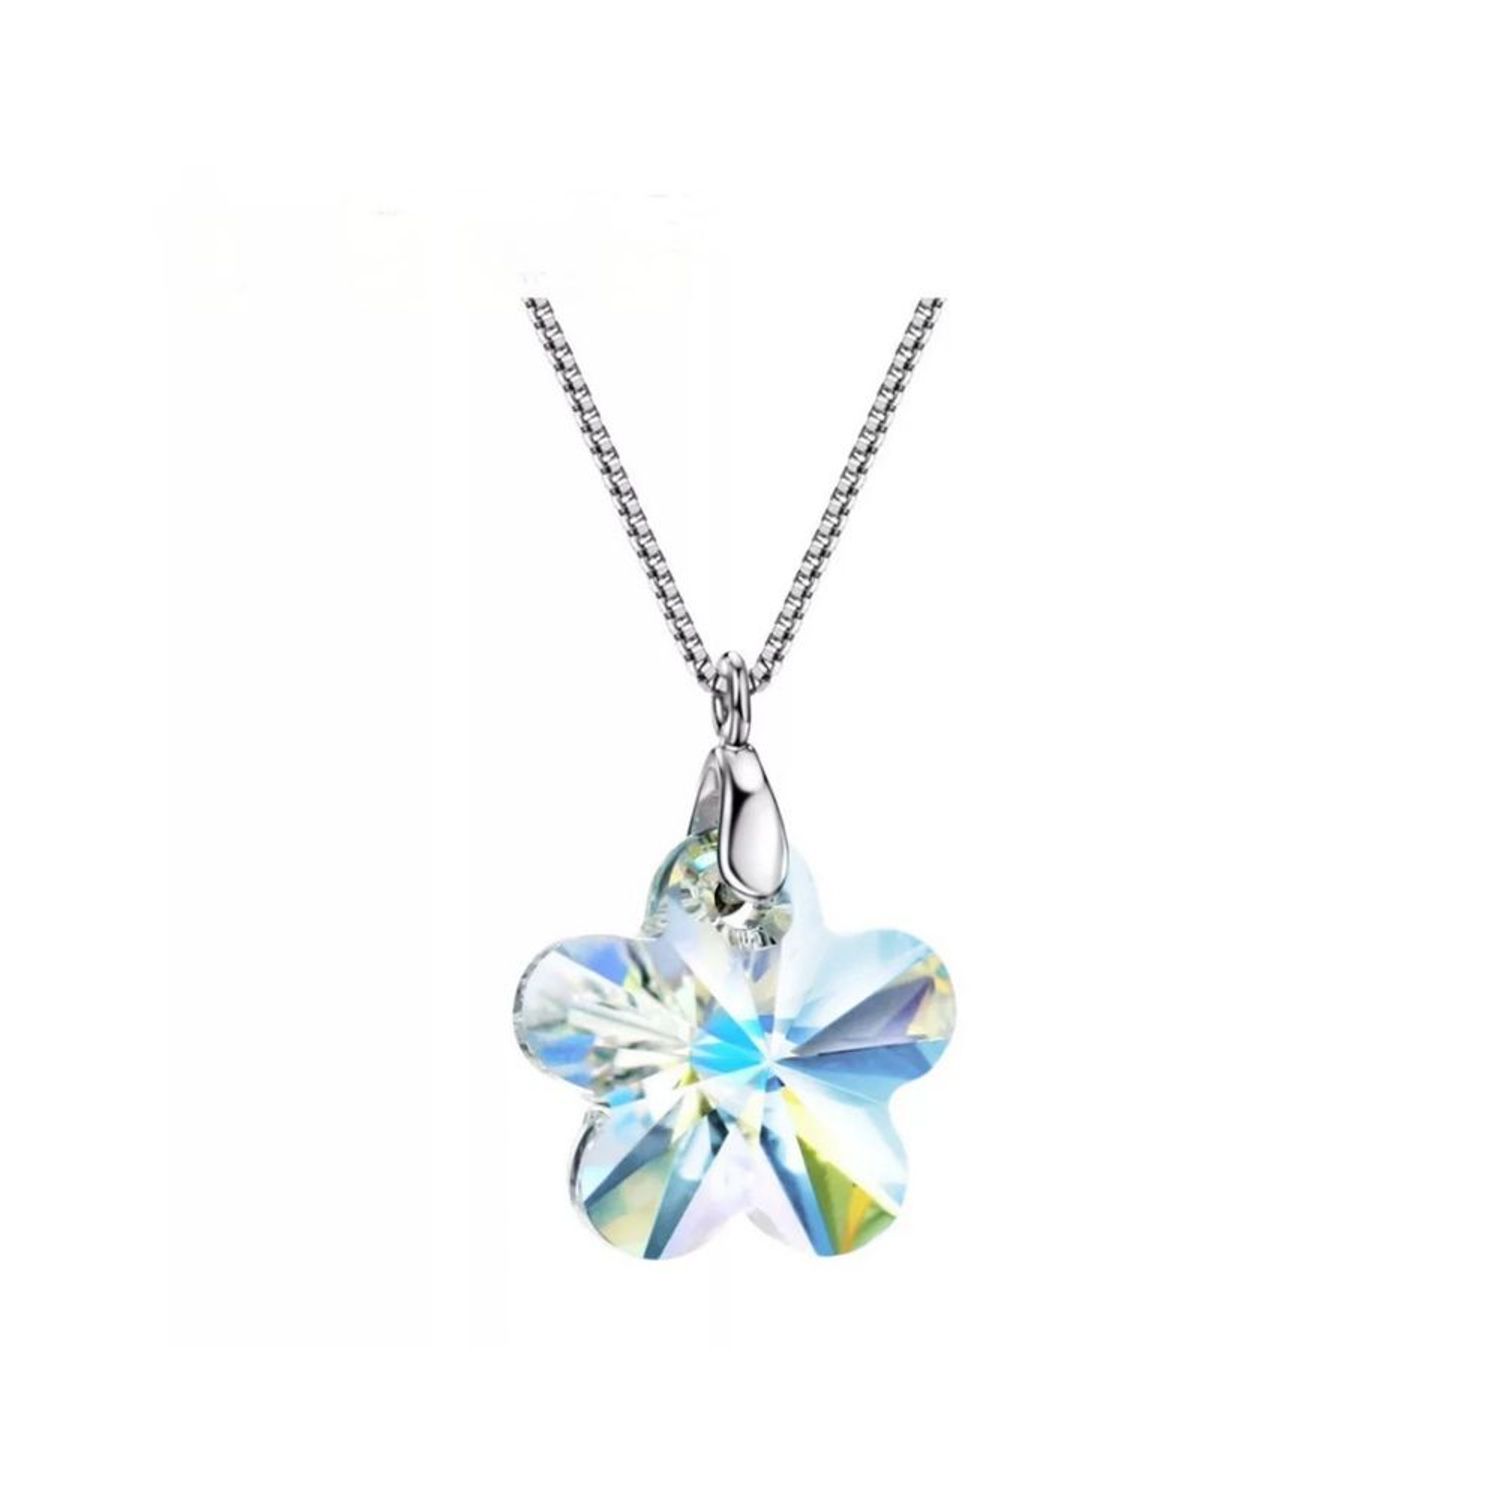 Collar de Plata Shop dije Cristal Swarovski Flor Aurora Boreal para Regalo Mujer | Oechsle - Oechsle